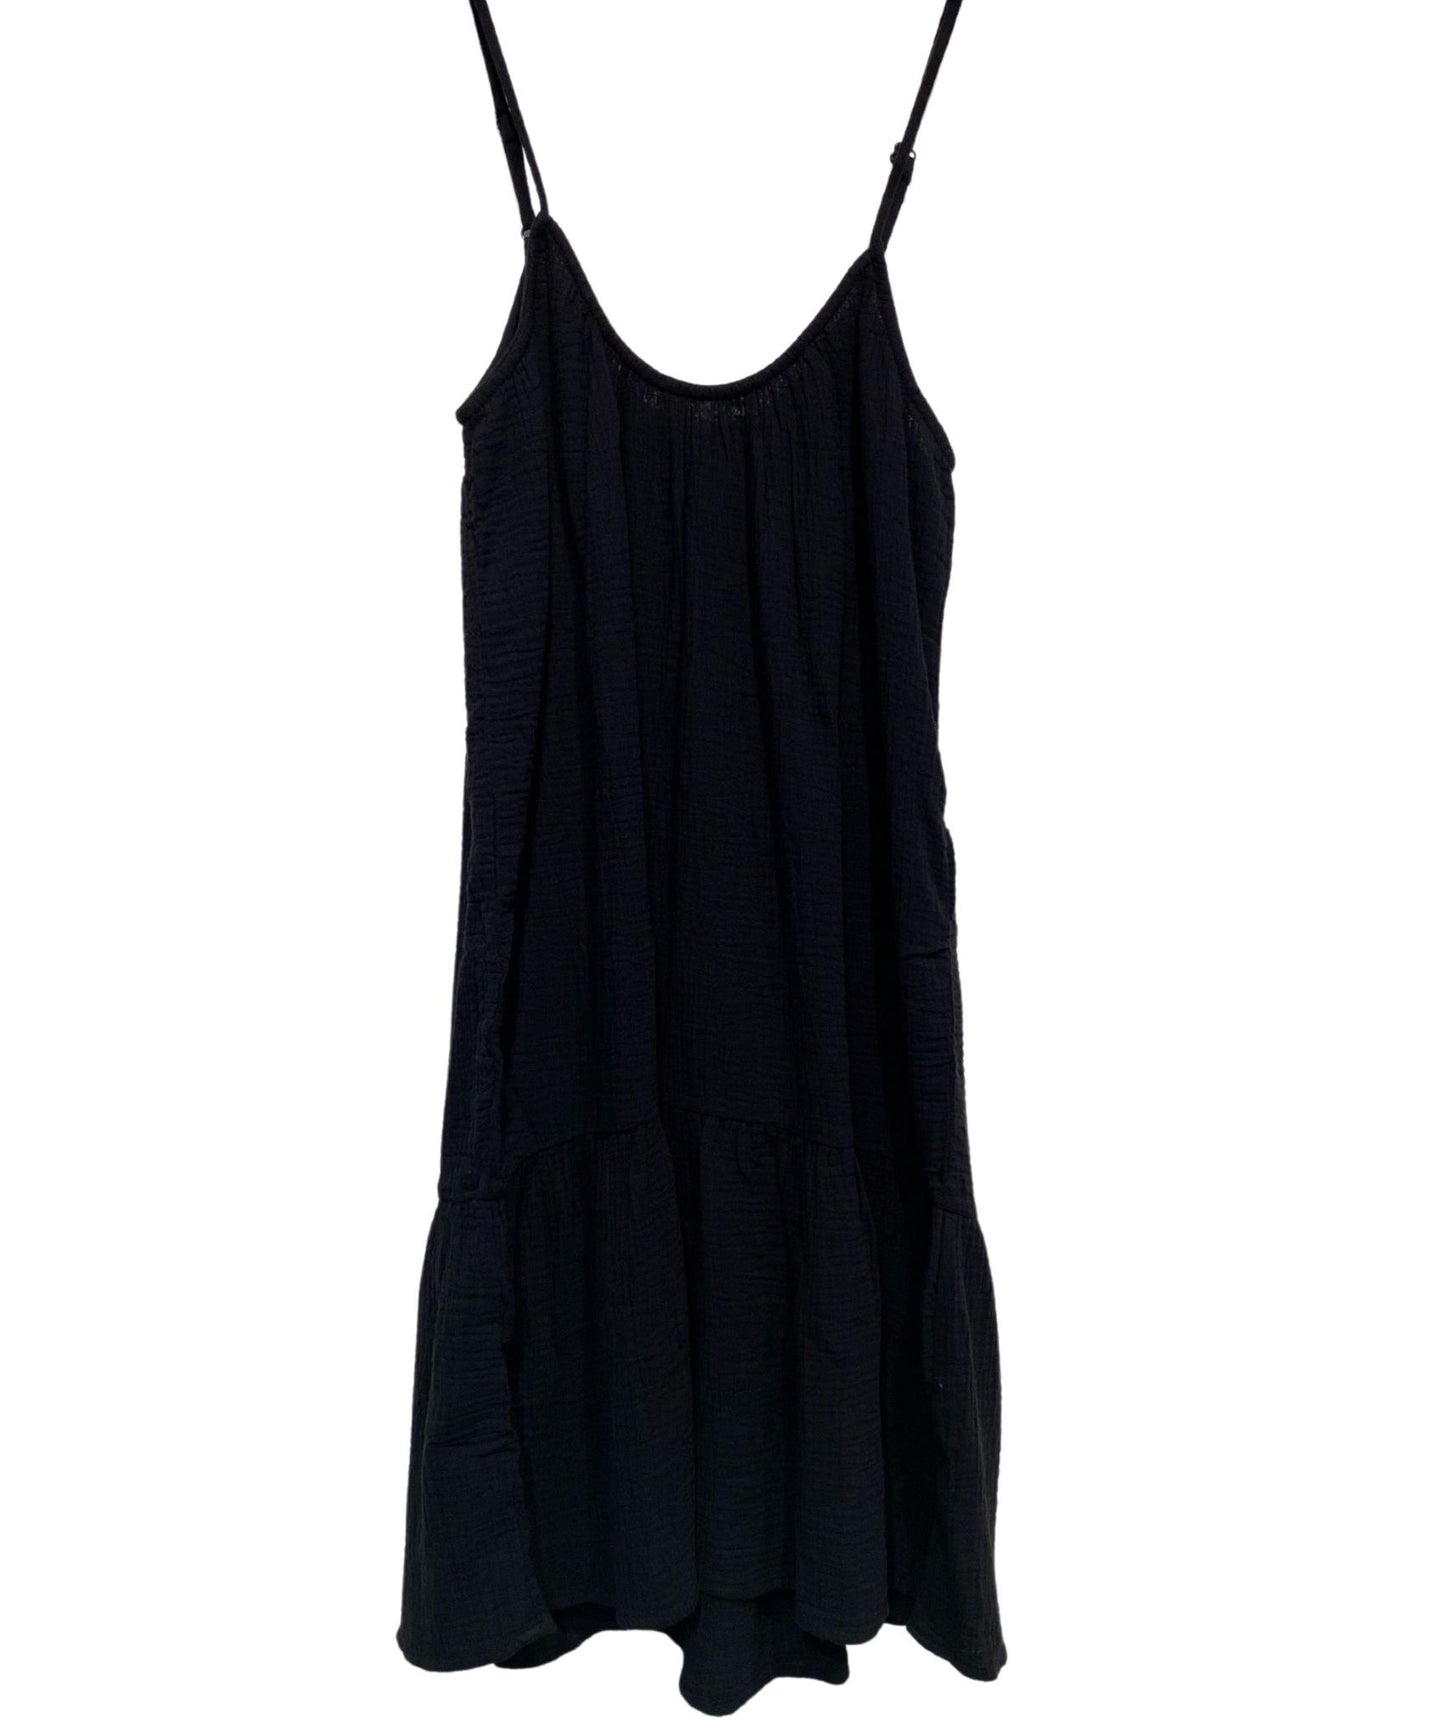 Supersoft Gauze Lilou Dress in color Black